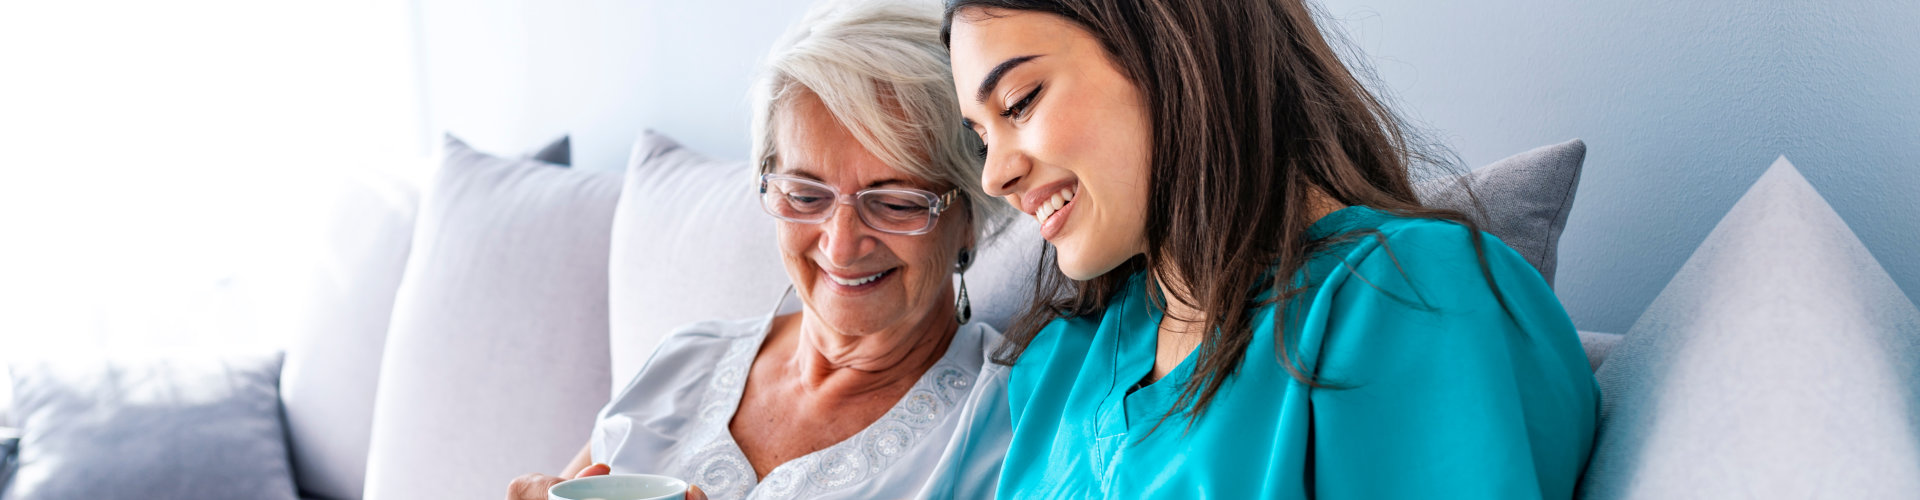 Young nurse spending time with happy elder patient in nursing home